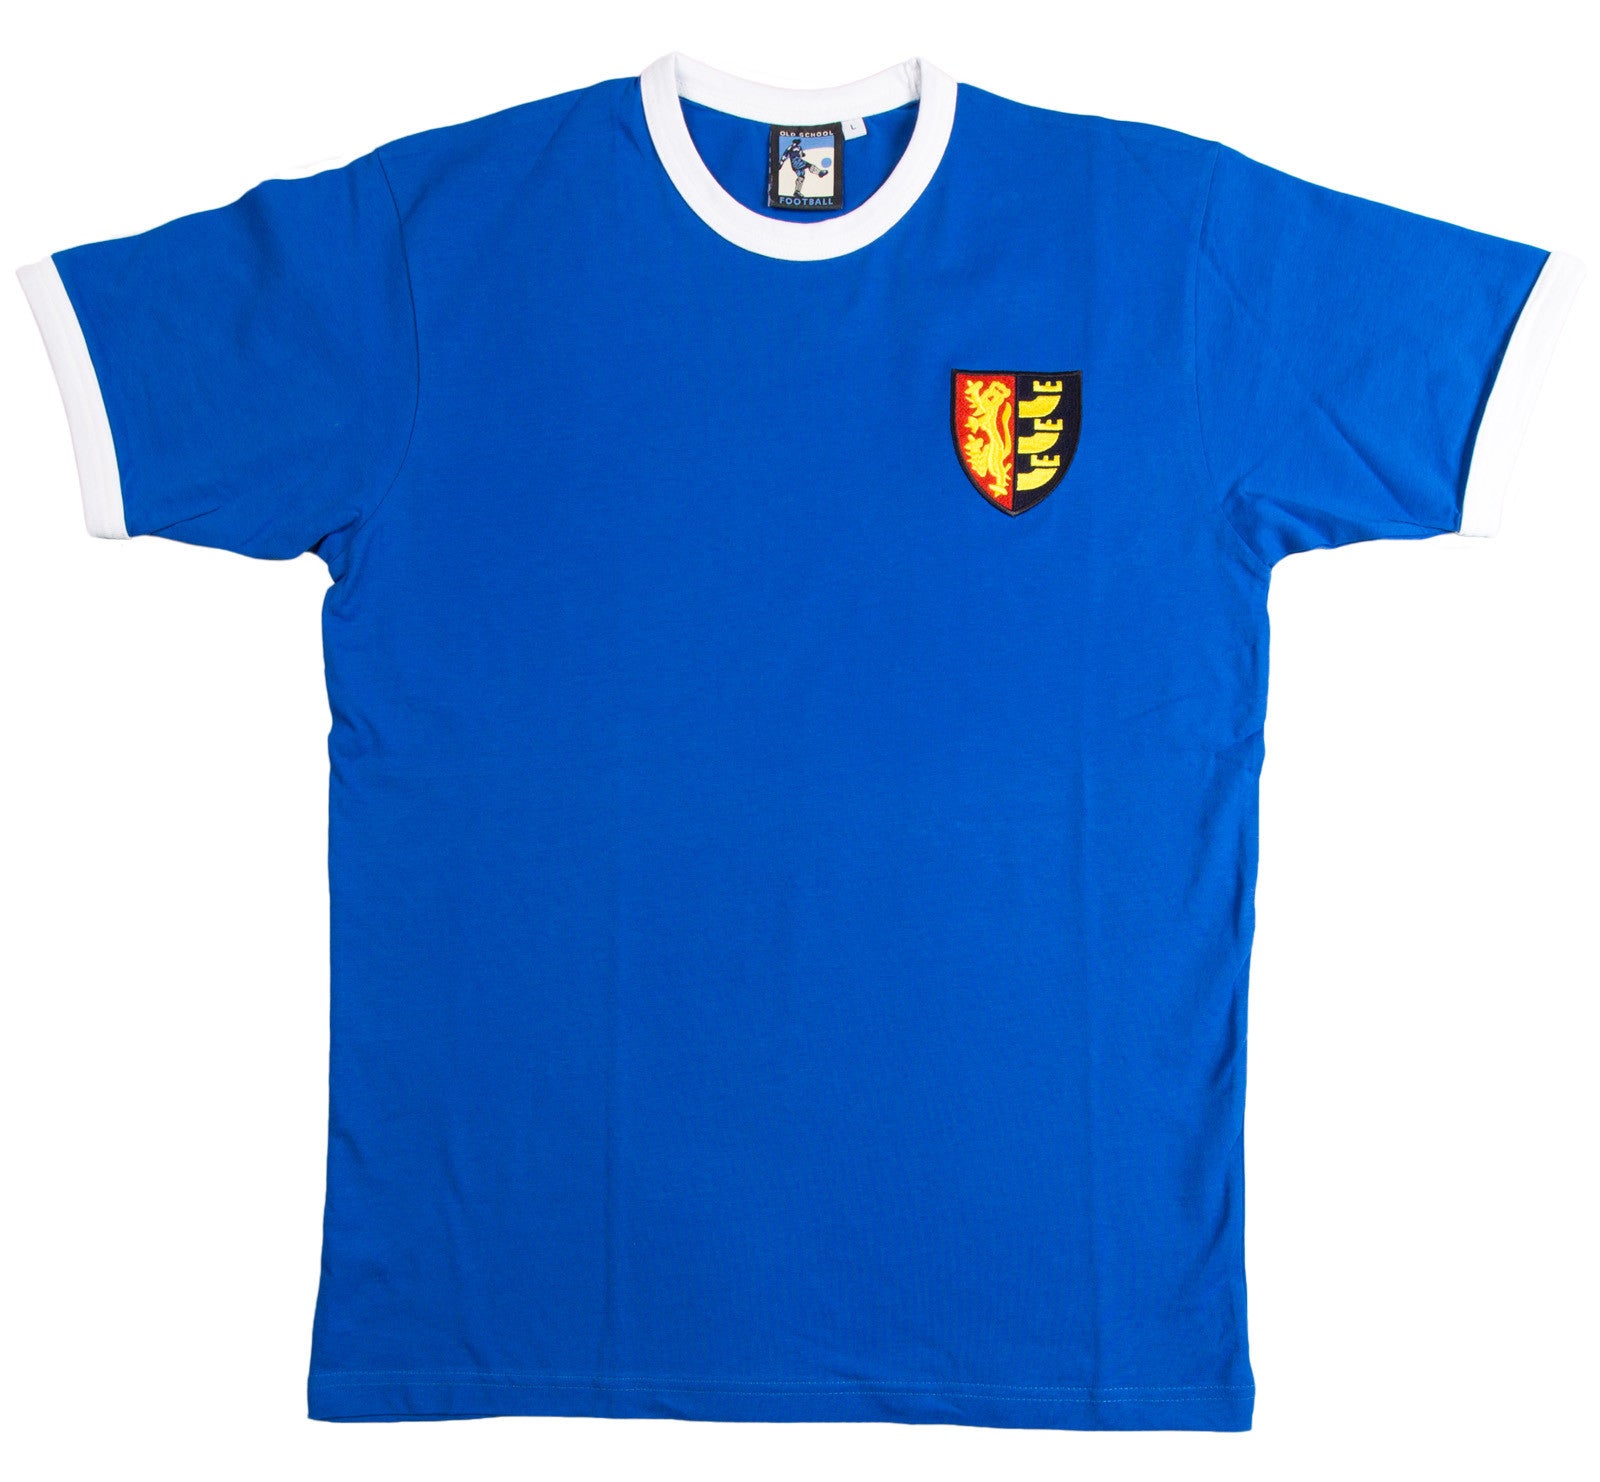 Ipswich Town Retro Football T Shirt 1960s - 1970s - Old School Football